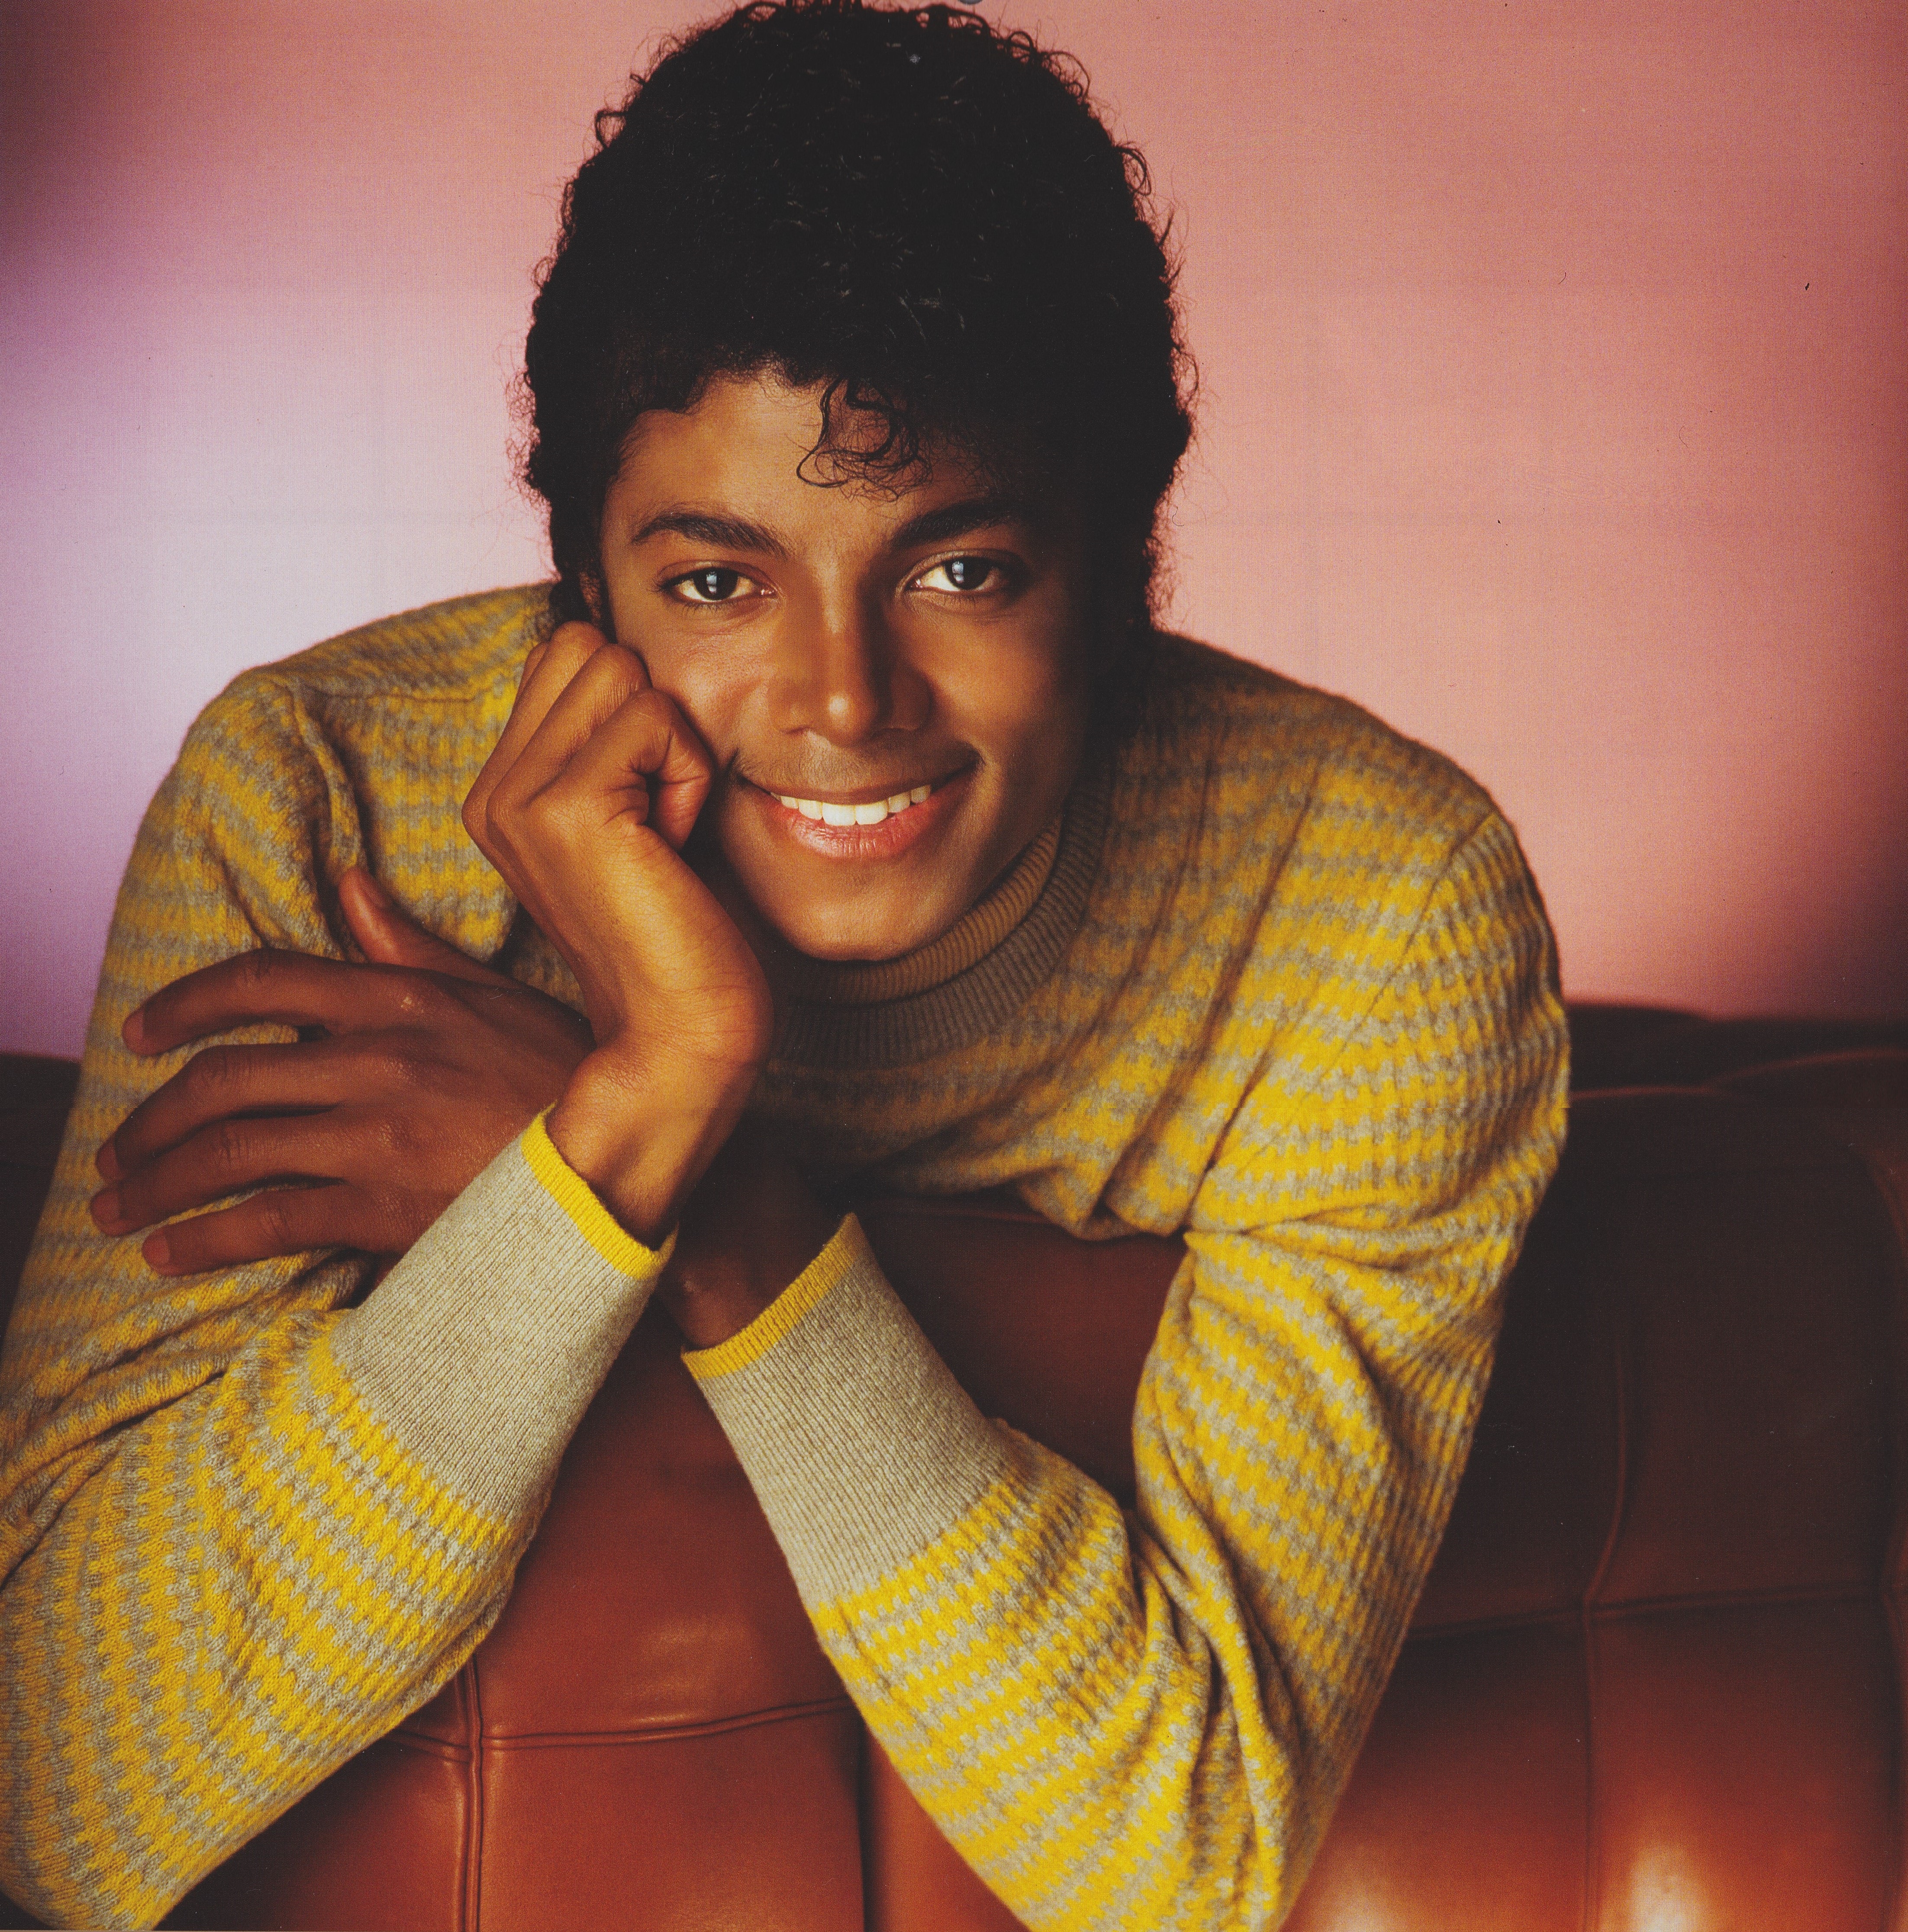 Michael Jackson - HQ Scan - Thriller Era Photoshoot